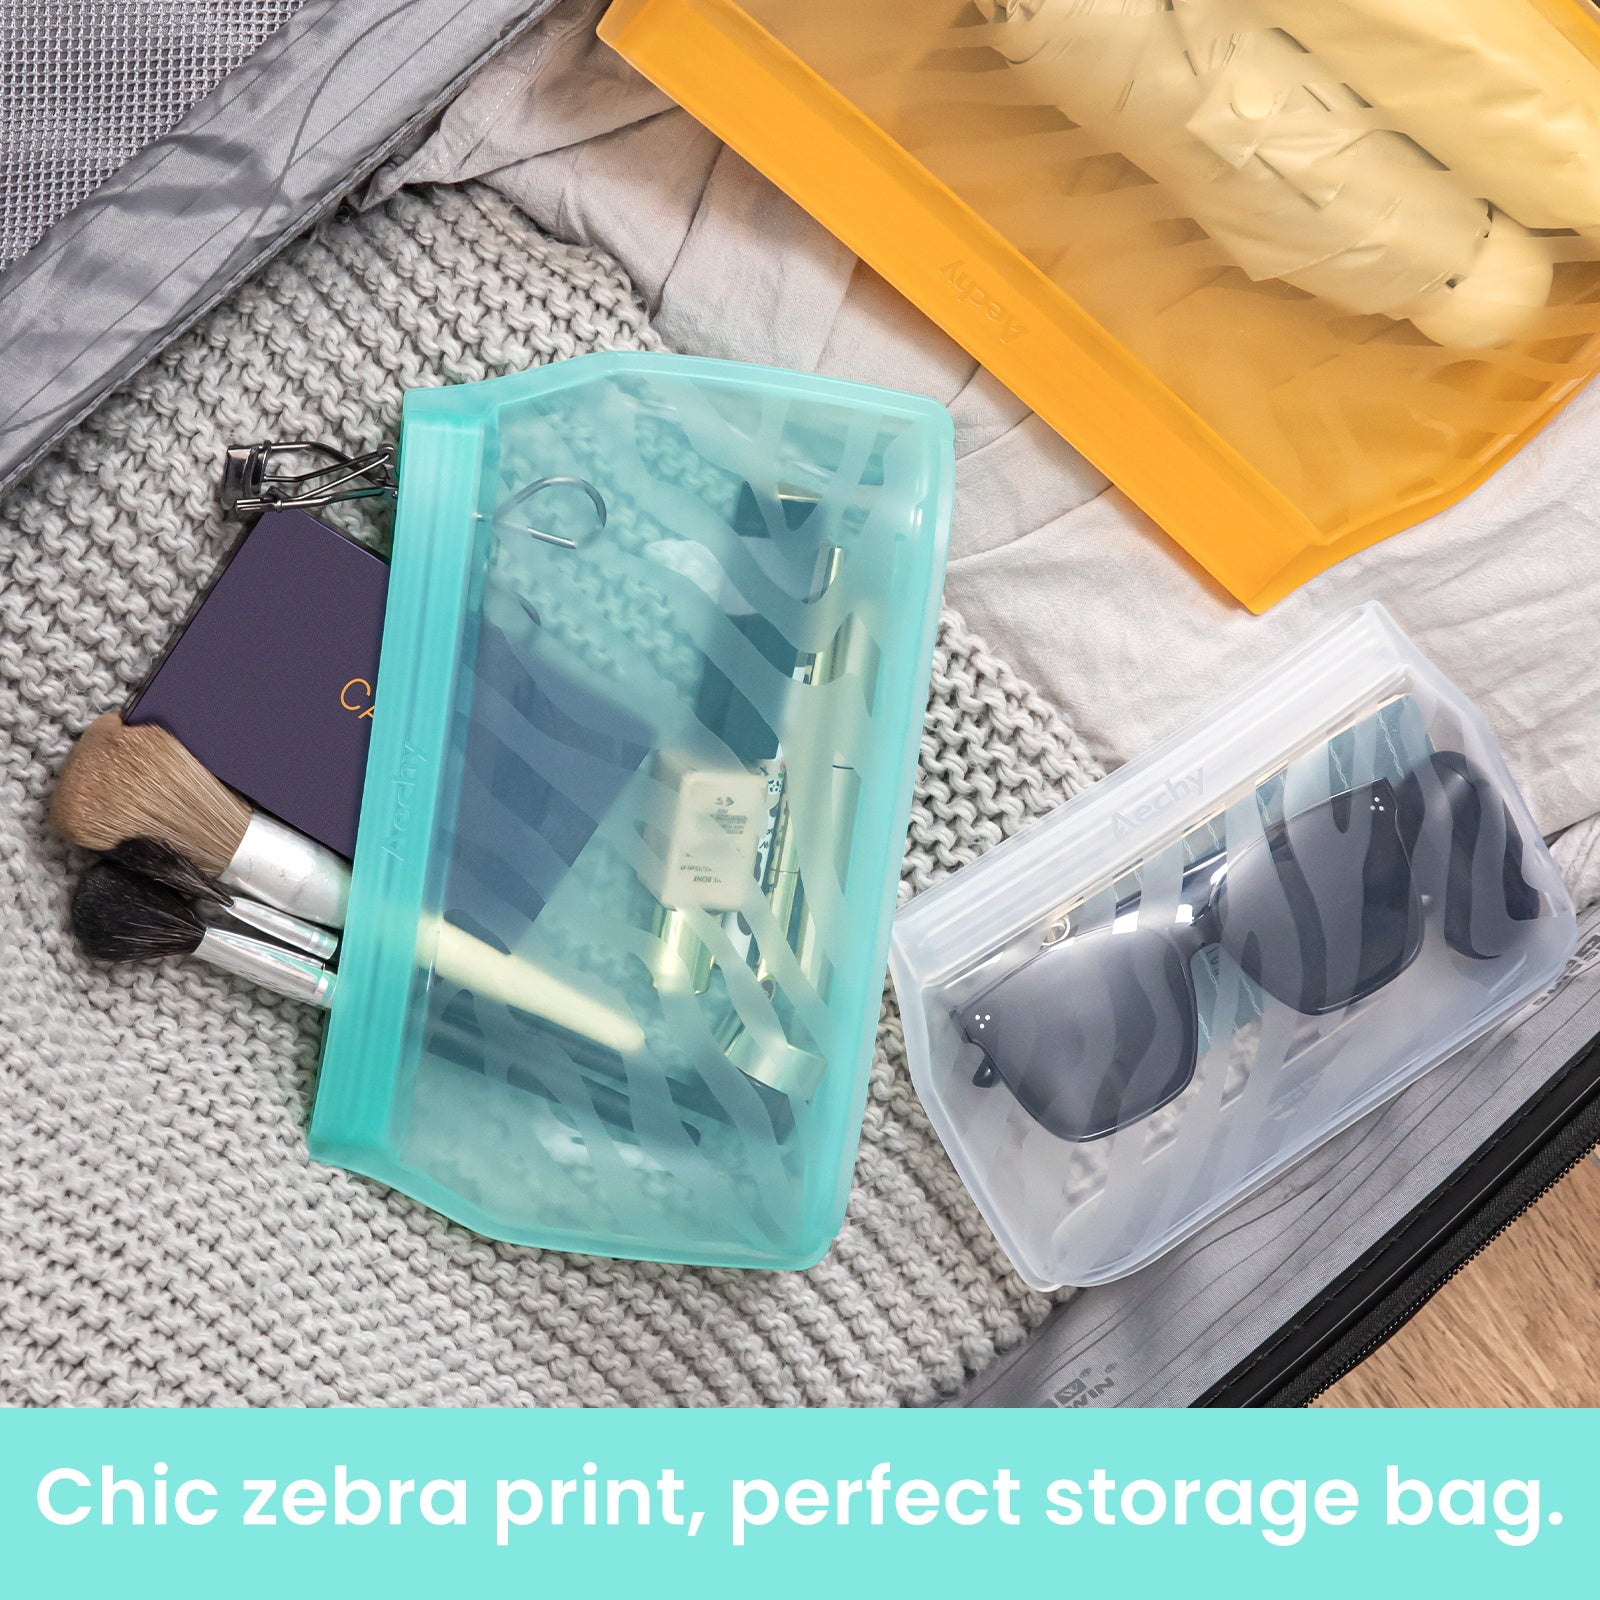 Food preservation bag Household thickening point-off refrigerator special  fresh-keeping bag food ziplock storage bag package bag